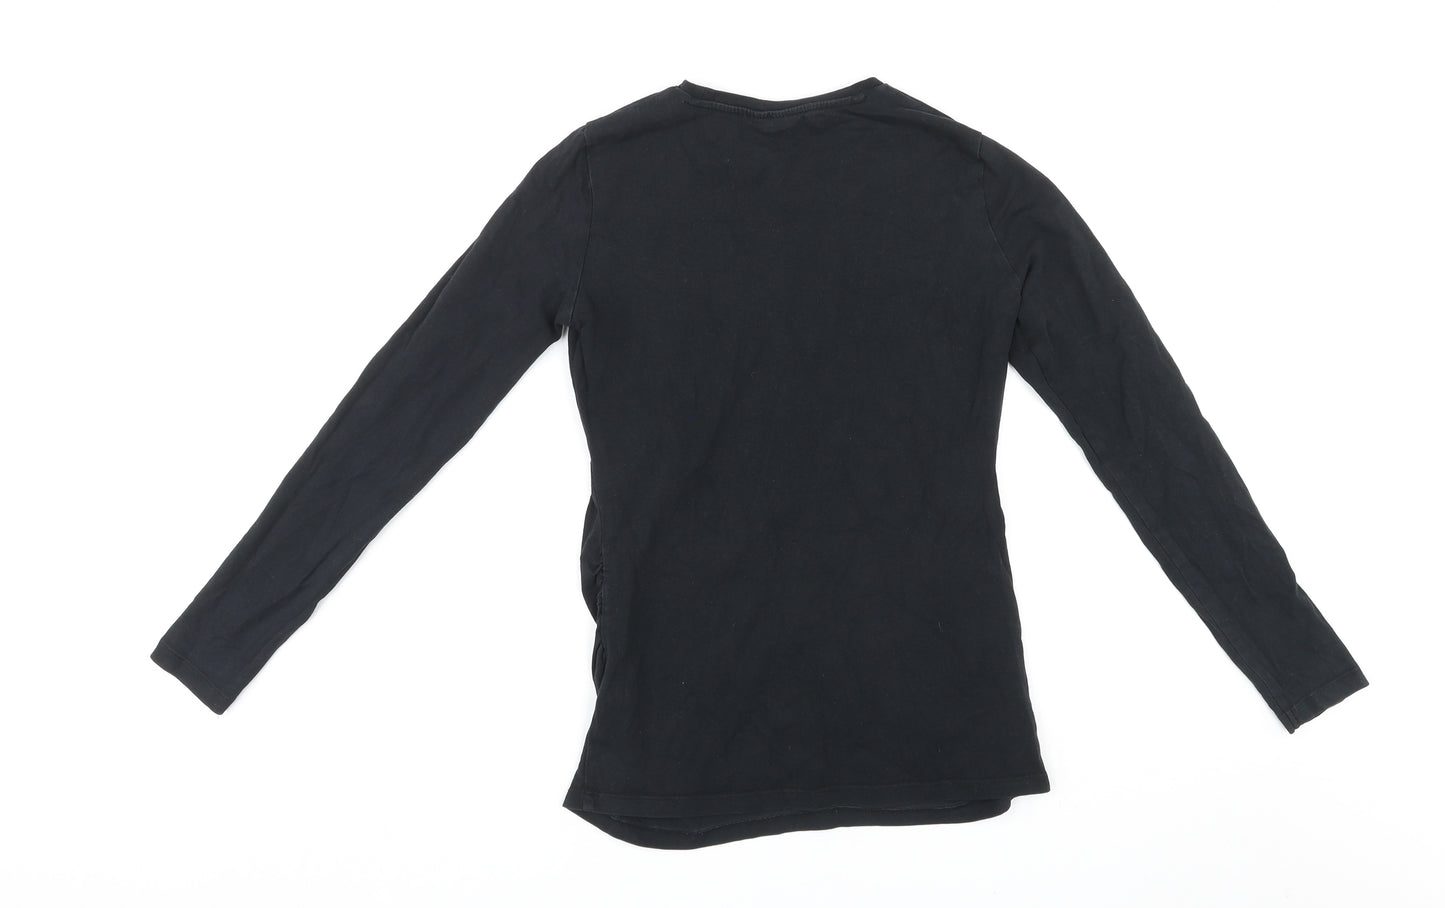 ASOS Womens Black Cotton Basic T-Shirt Size 8 Round Neck